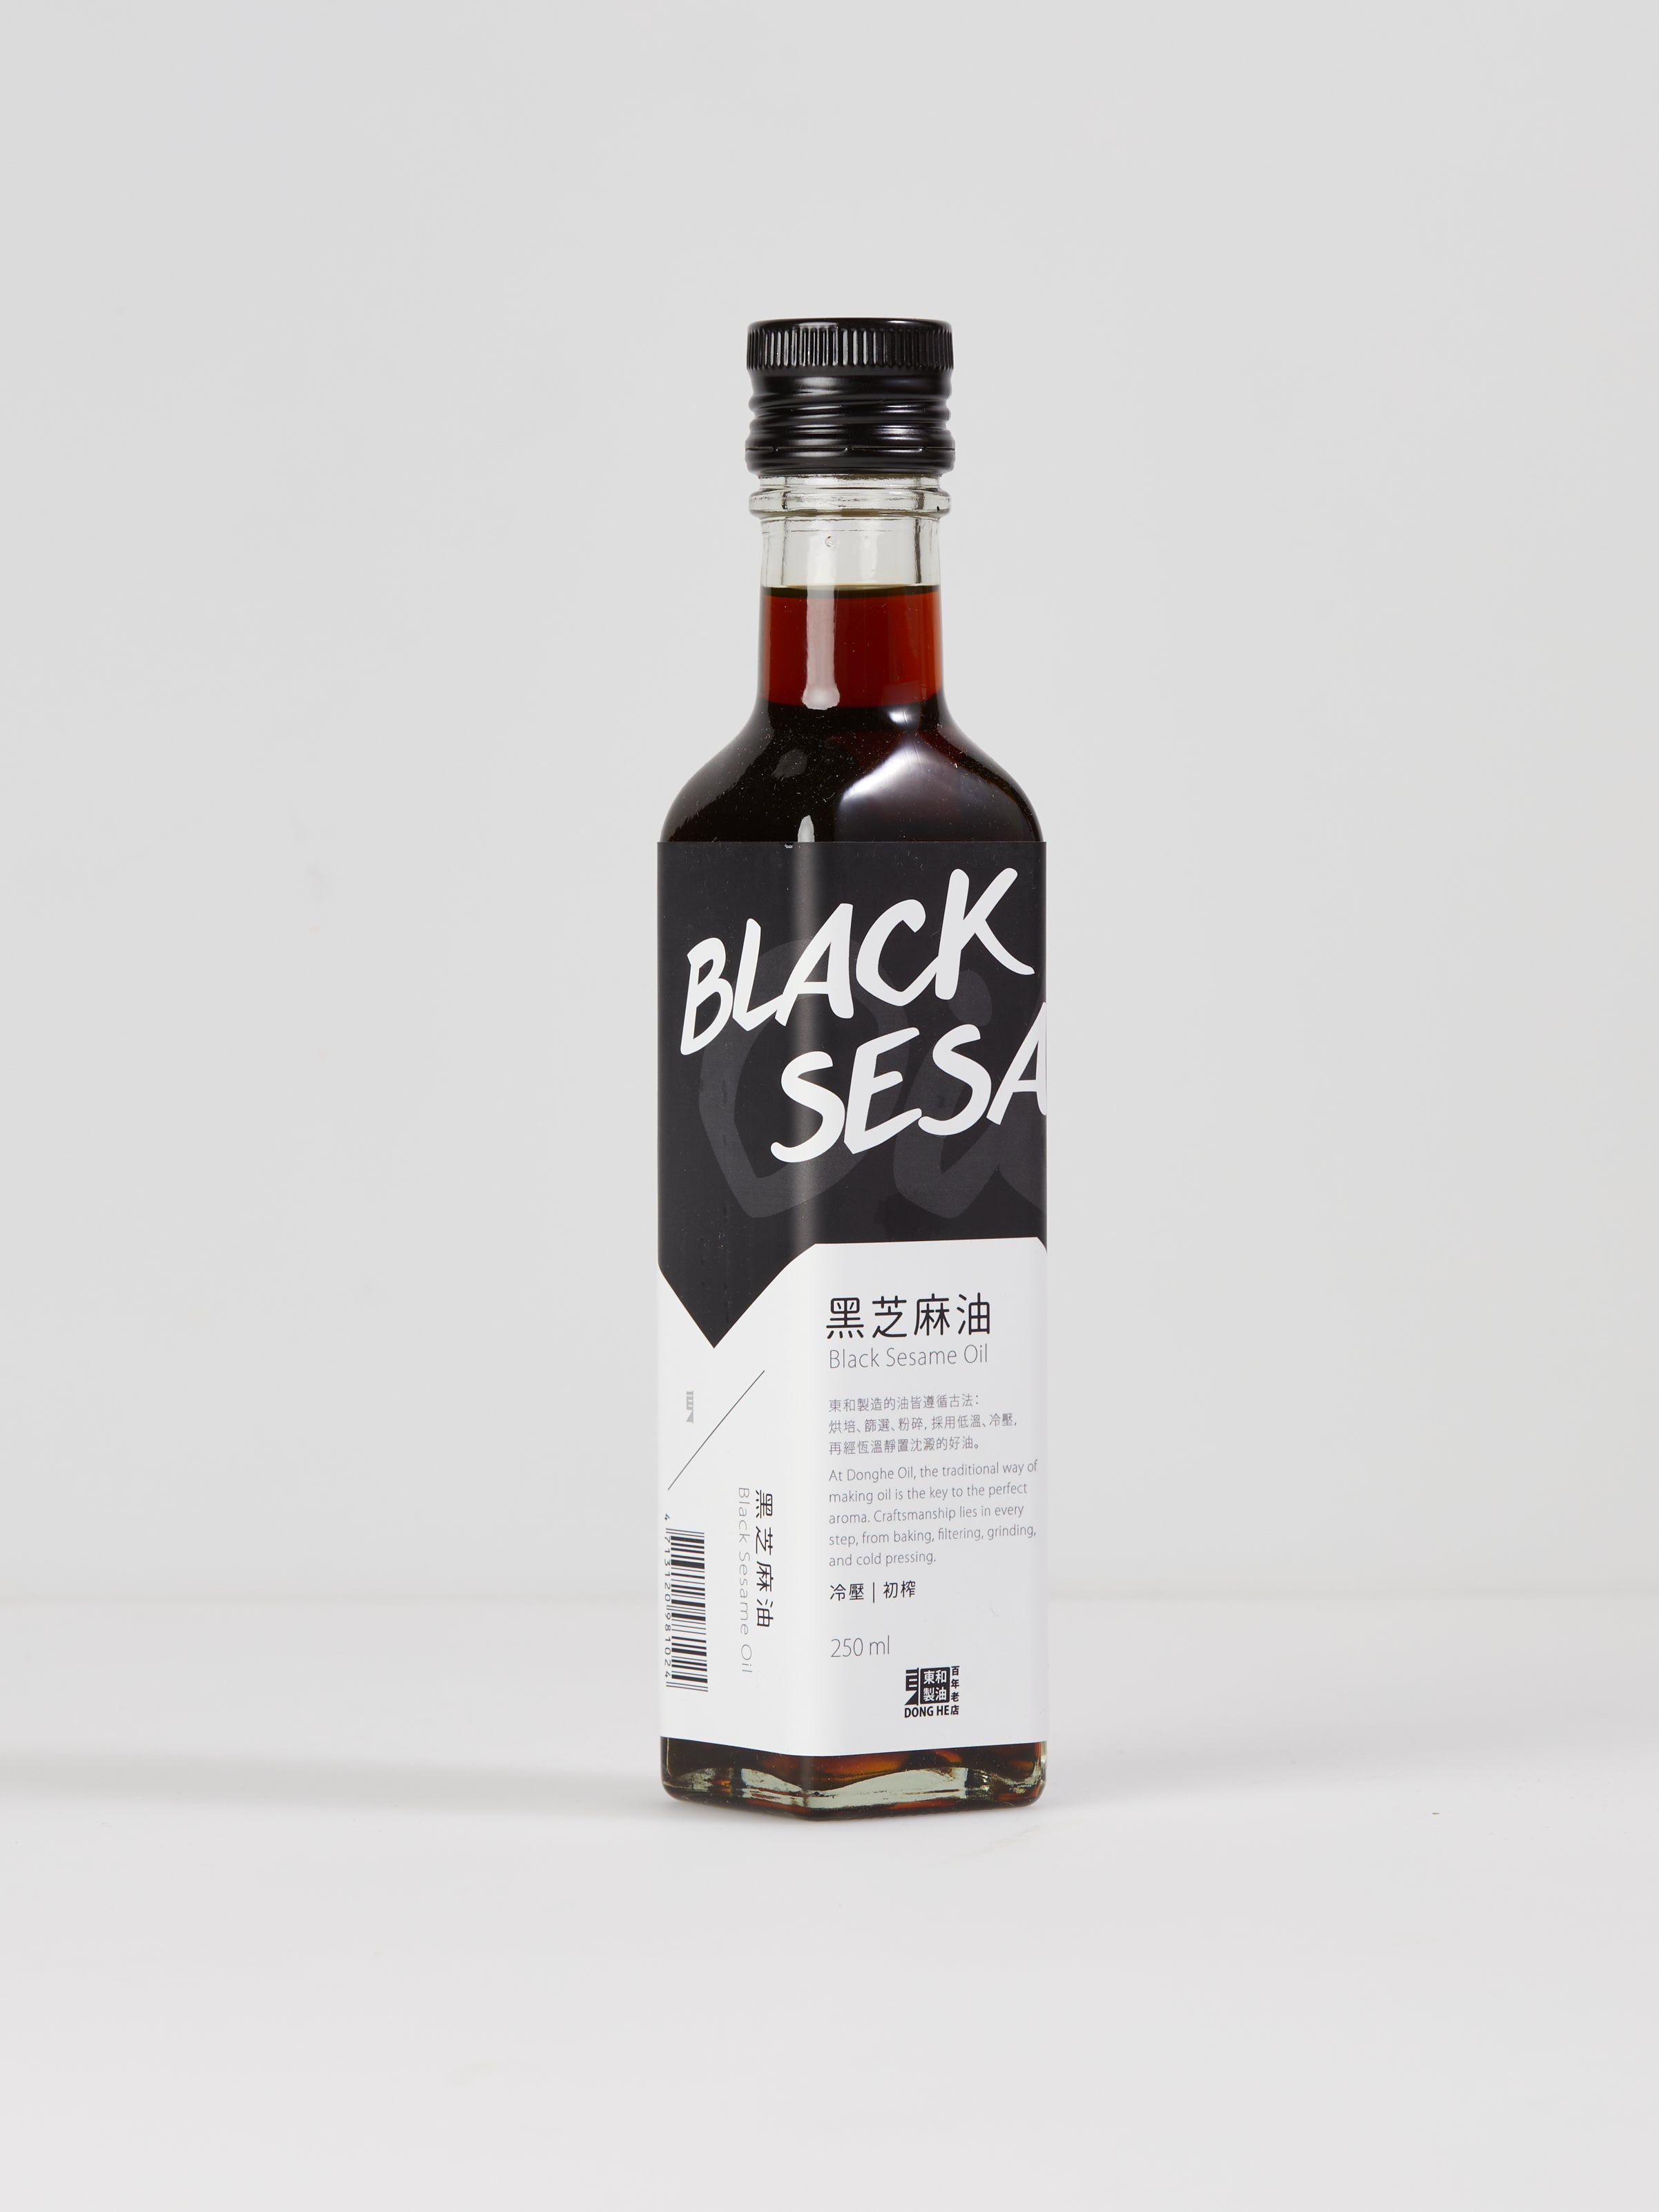 Original Bottle: Monochrome All Black